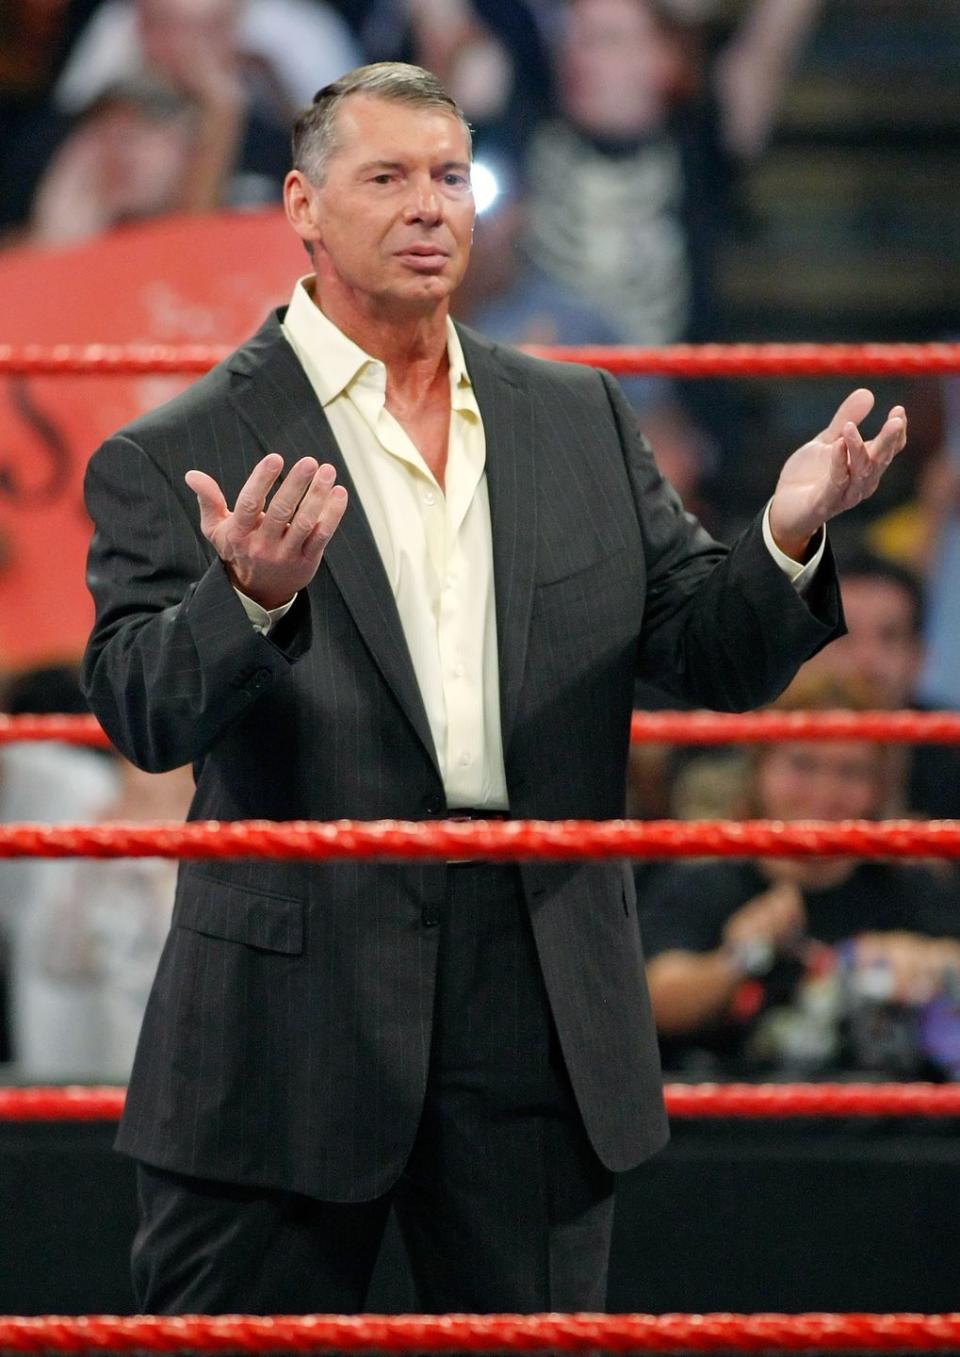 No touching Vince McMahon.